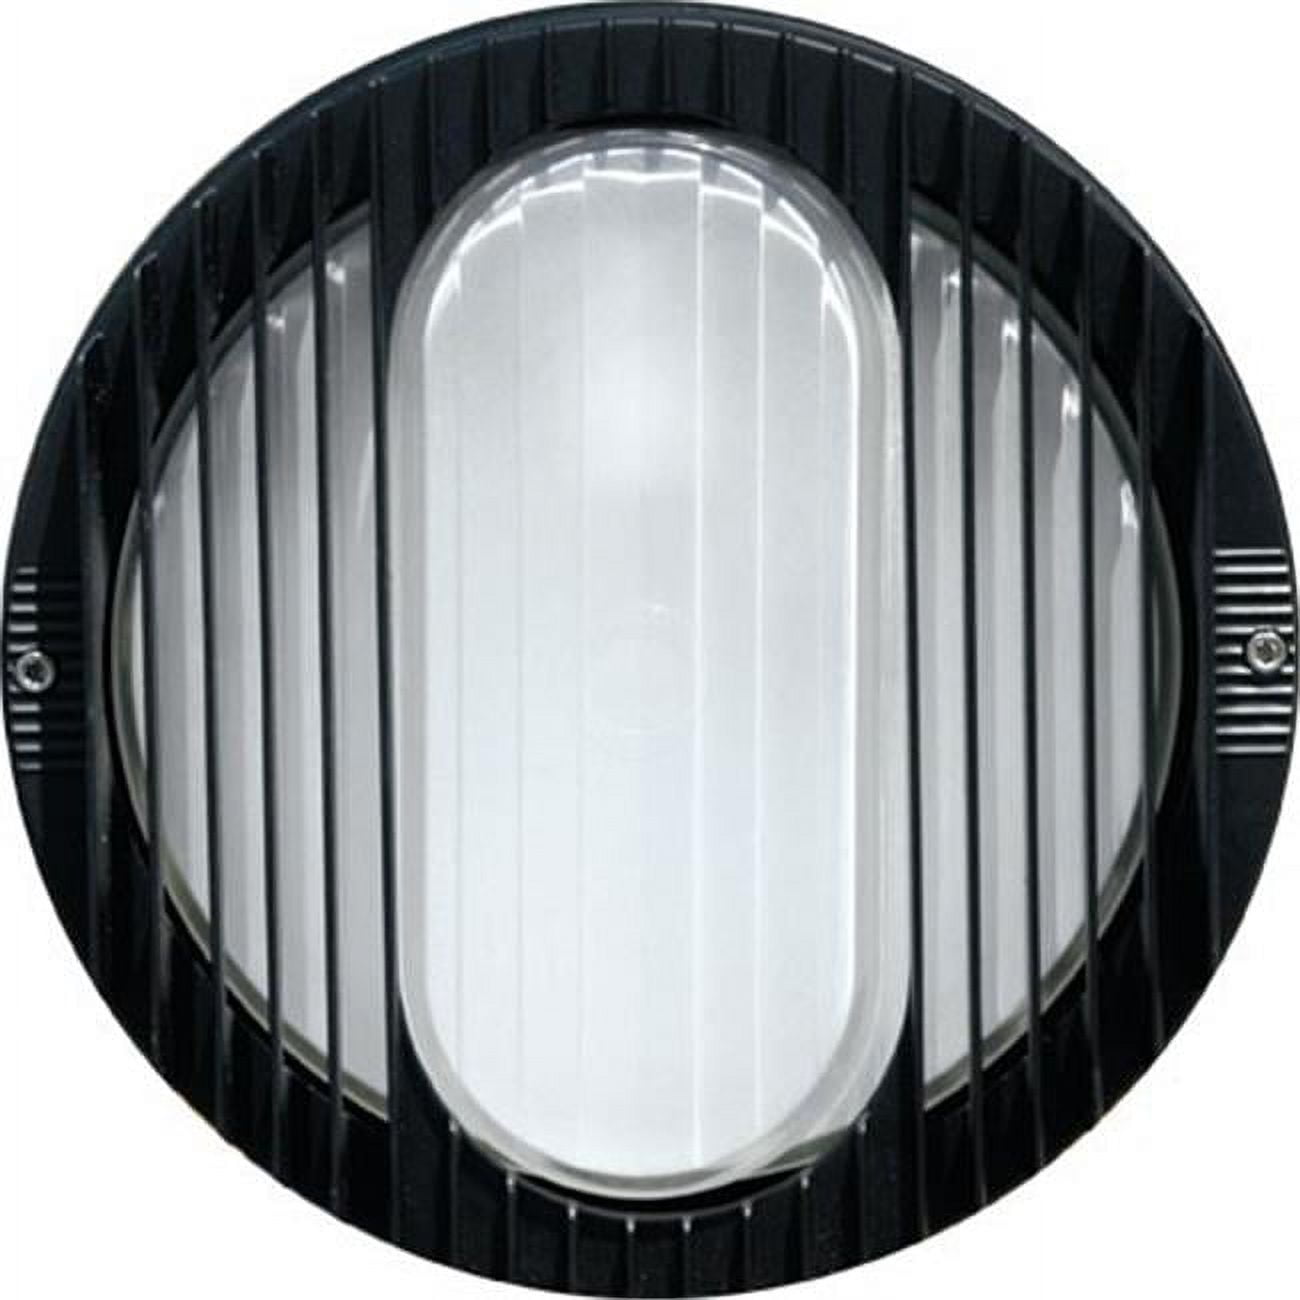 Picture of Dabmar Lighting W3050-LED9-B Cast Aluminum Wall Fixture LED - 9W 85-265V, Black